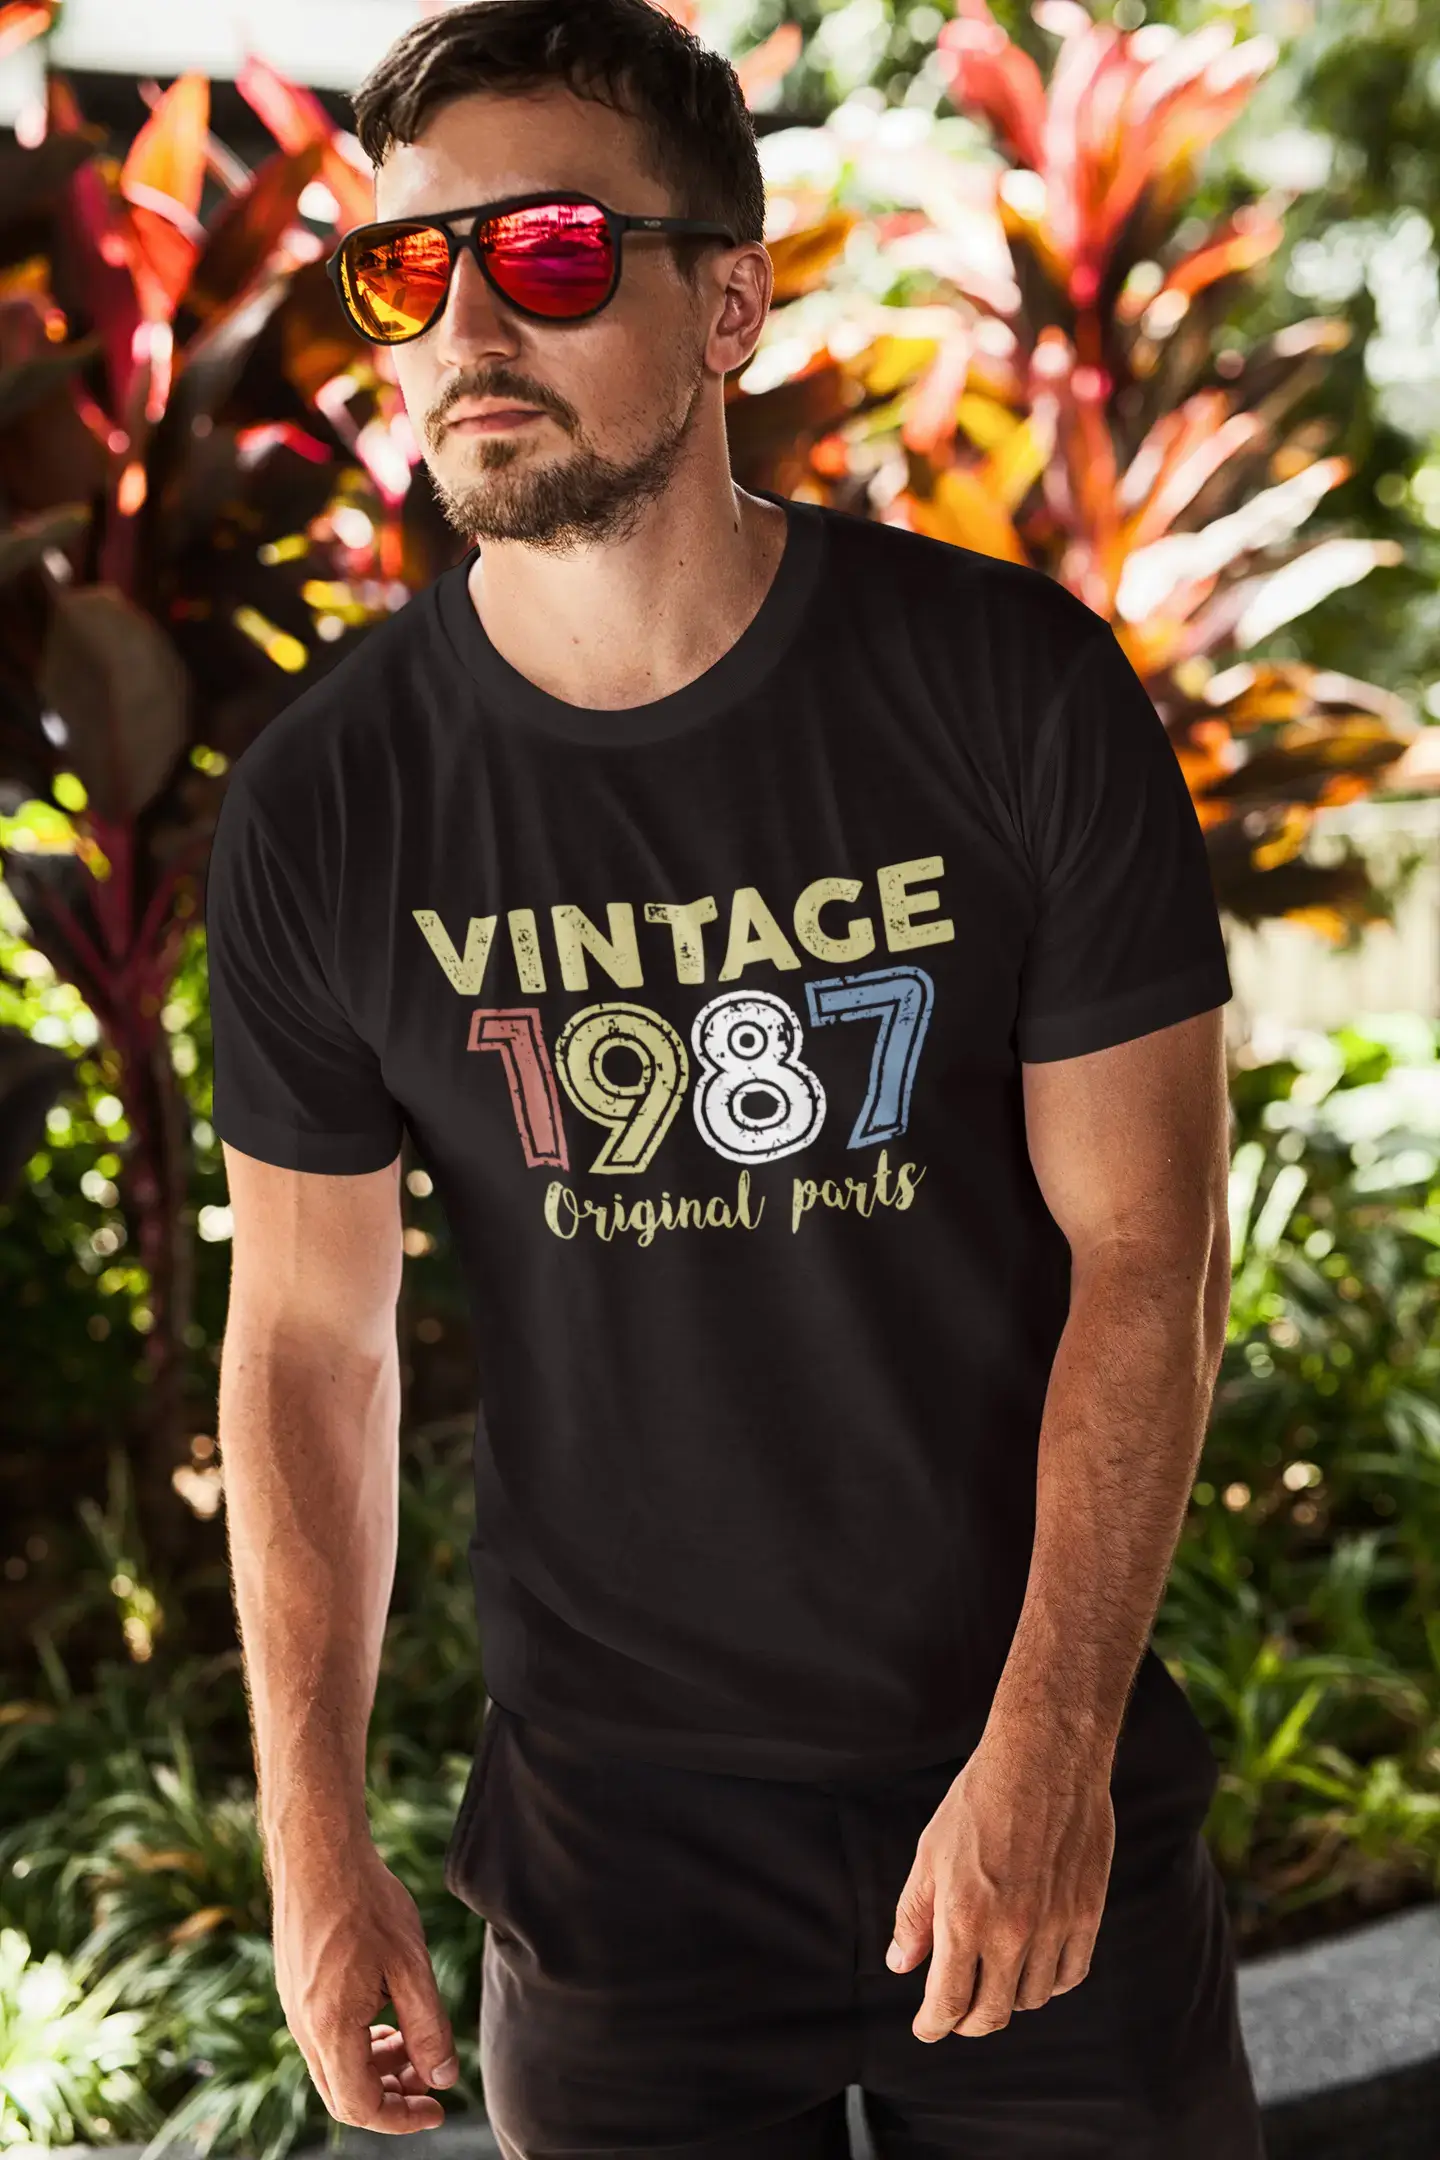 ULTRABASIC - Graphic Printed Men's Vintage 1987 T-Shirt Denim